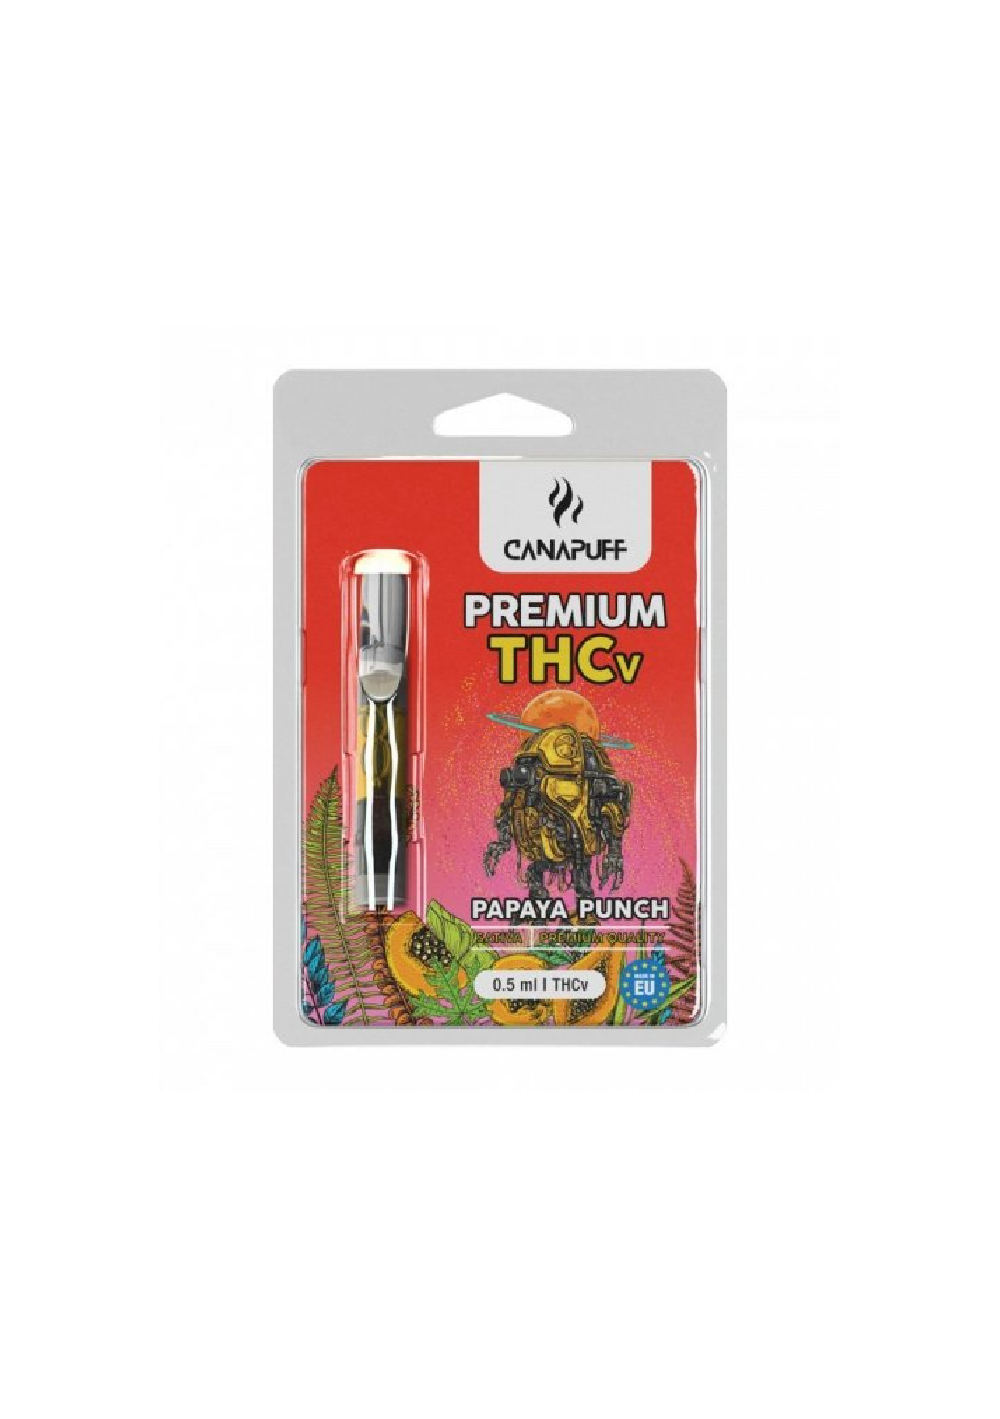 THC-V Cartuccia/Atomizzatore - Papaya Punch - 0.5ml, 96% THCv - 250 Puffs - CanaPuff